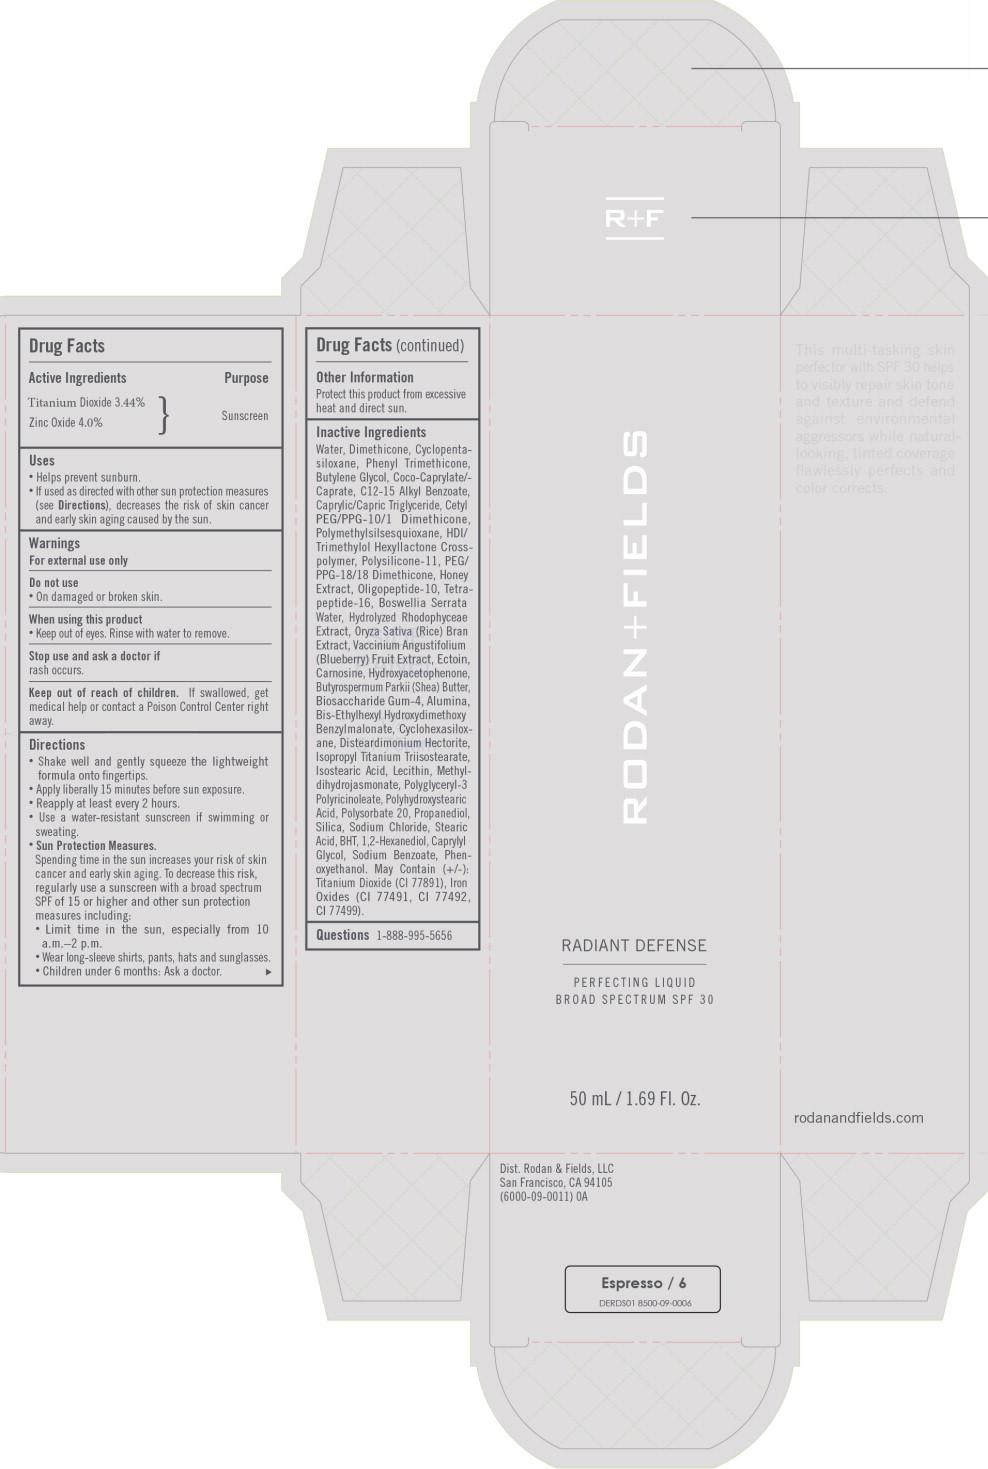 Principal Display Panel – 50 mL Espresso Box Label
